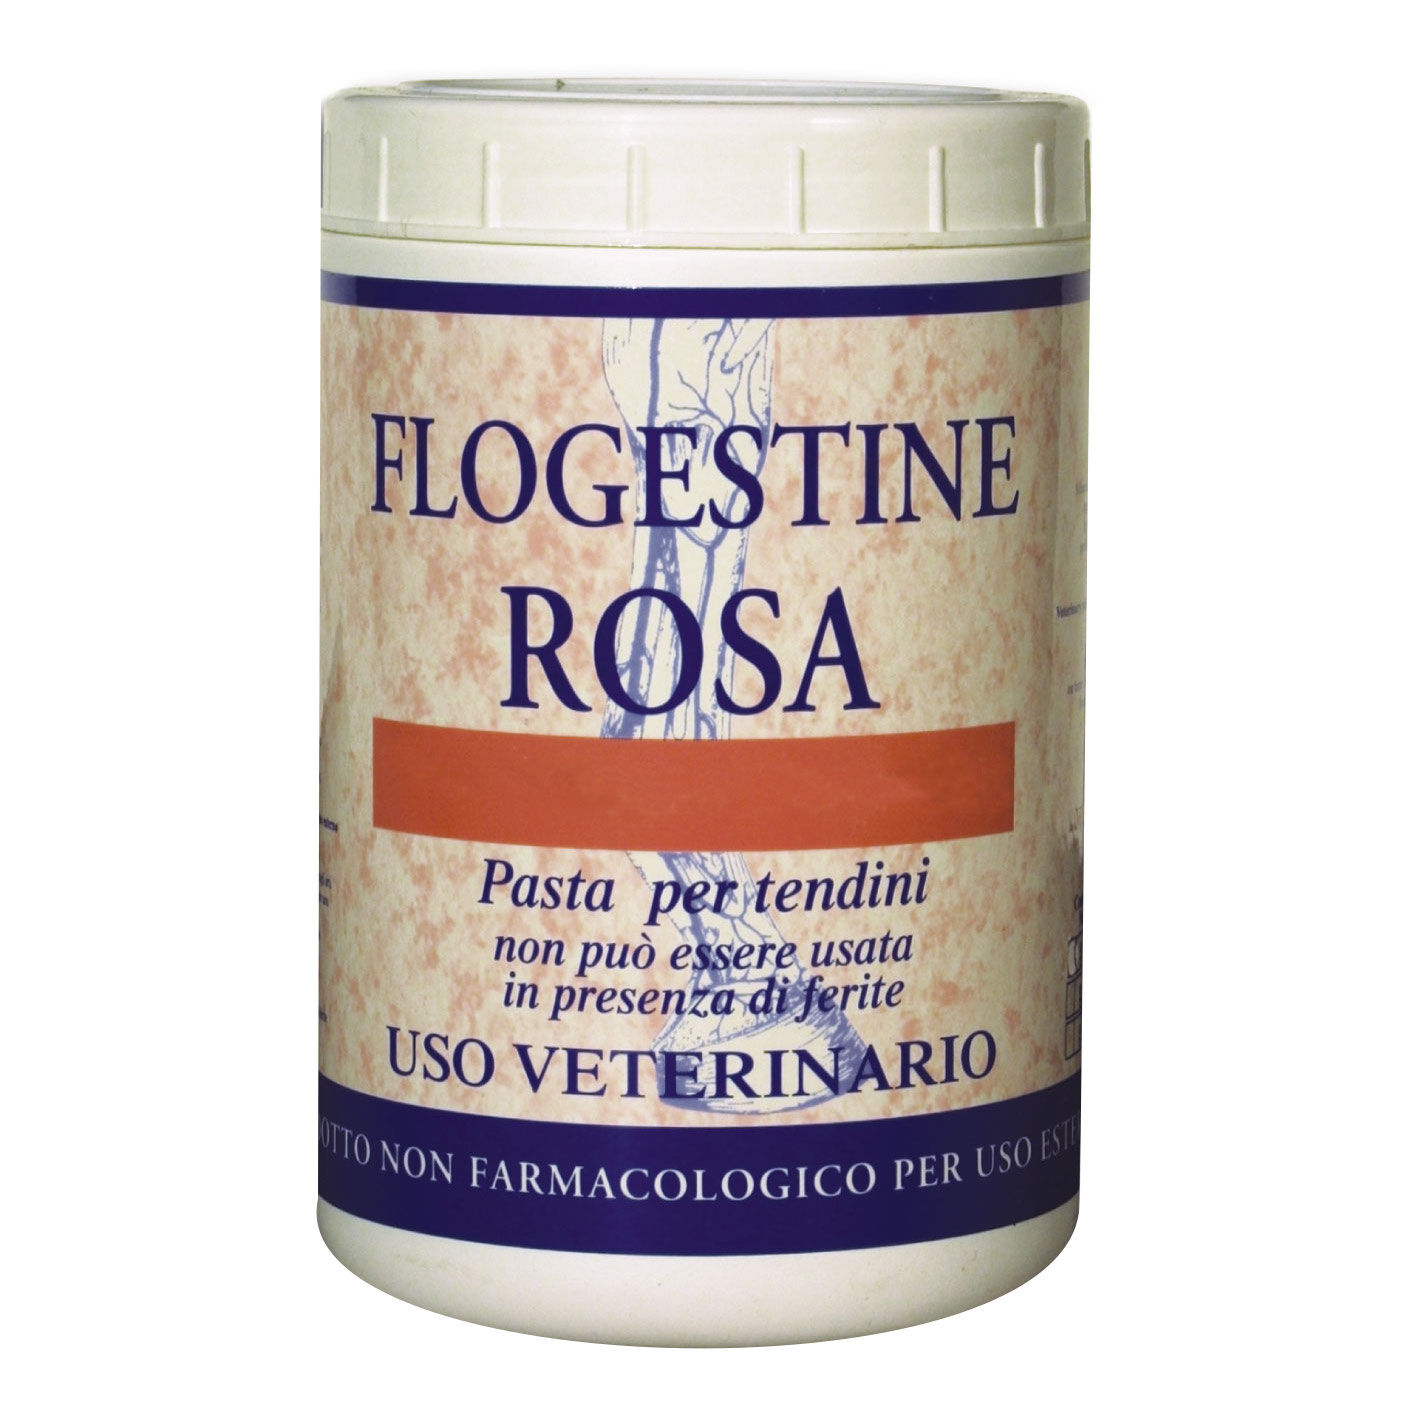 flogestina Flogestine rosa pasta 1kg